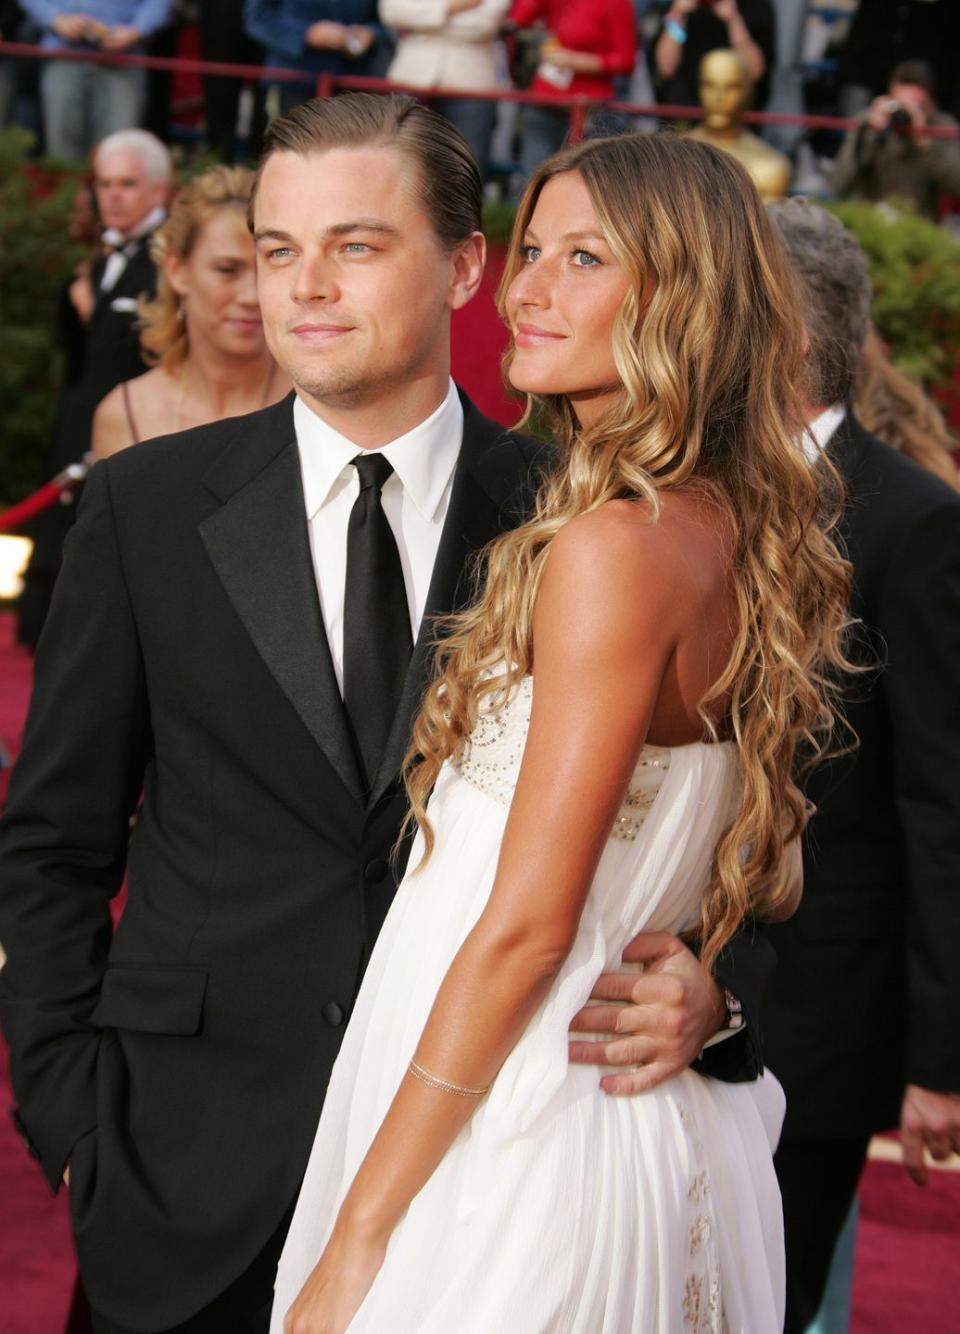 2005: Leonardo DiCaprio and Gisele Bündchen